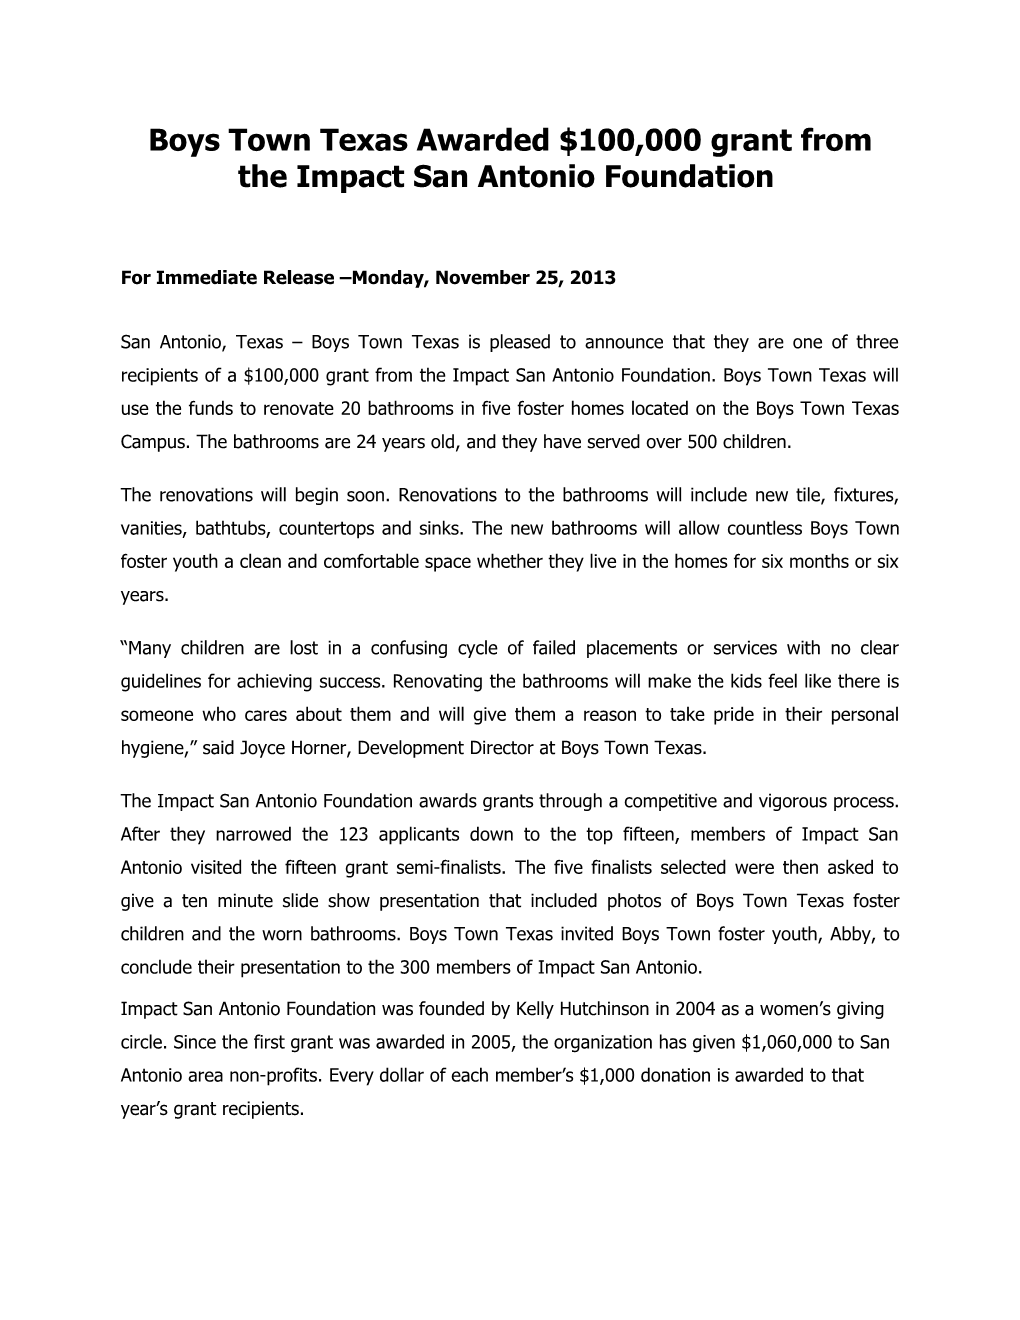 Boys Town Texas Awarded $100,000 Grant from the Impact San Antonio Foundation